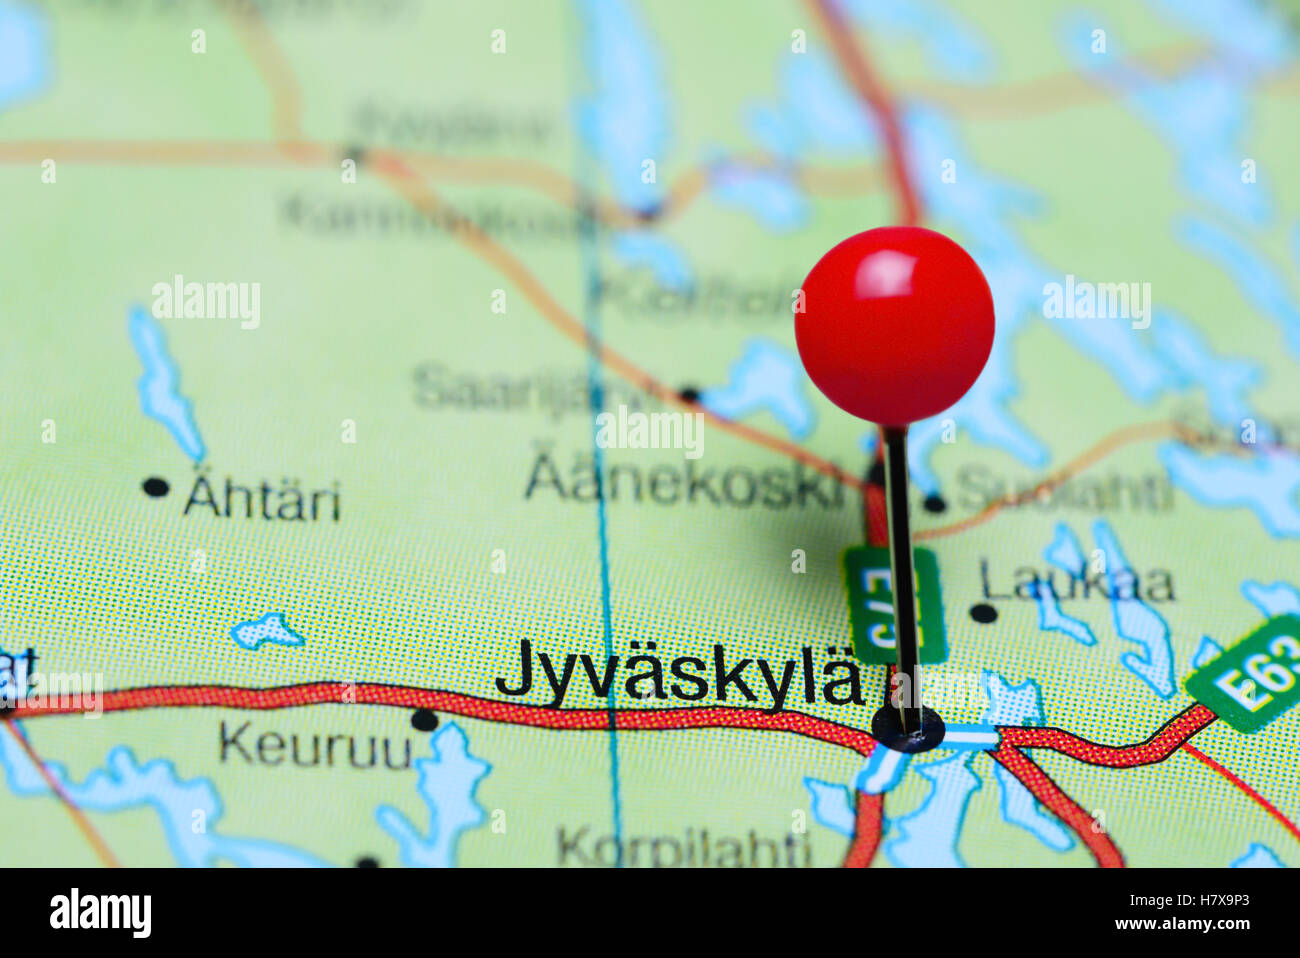 Jyvaskyla pinned on a map of Finland Stock Photo